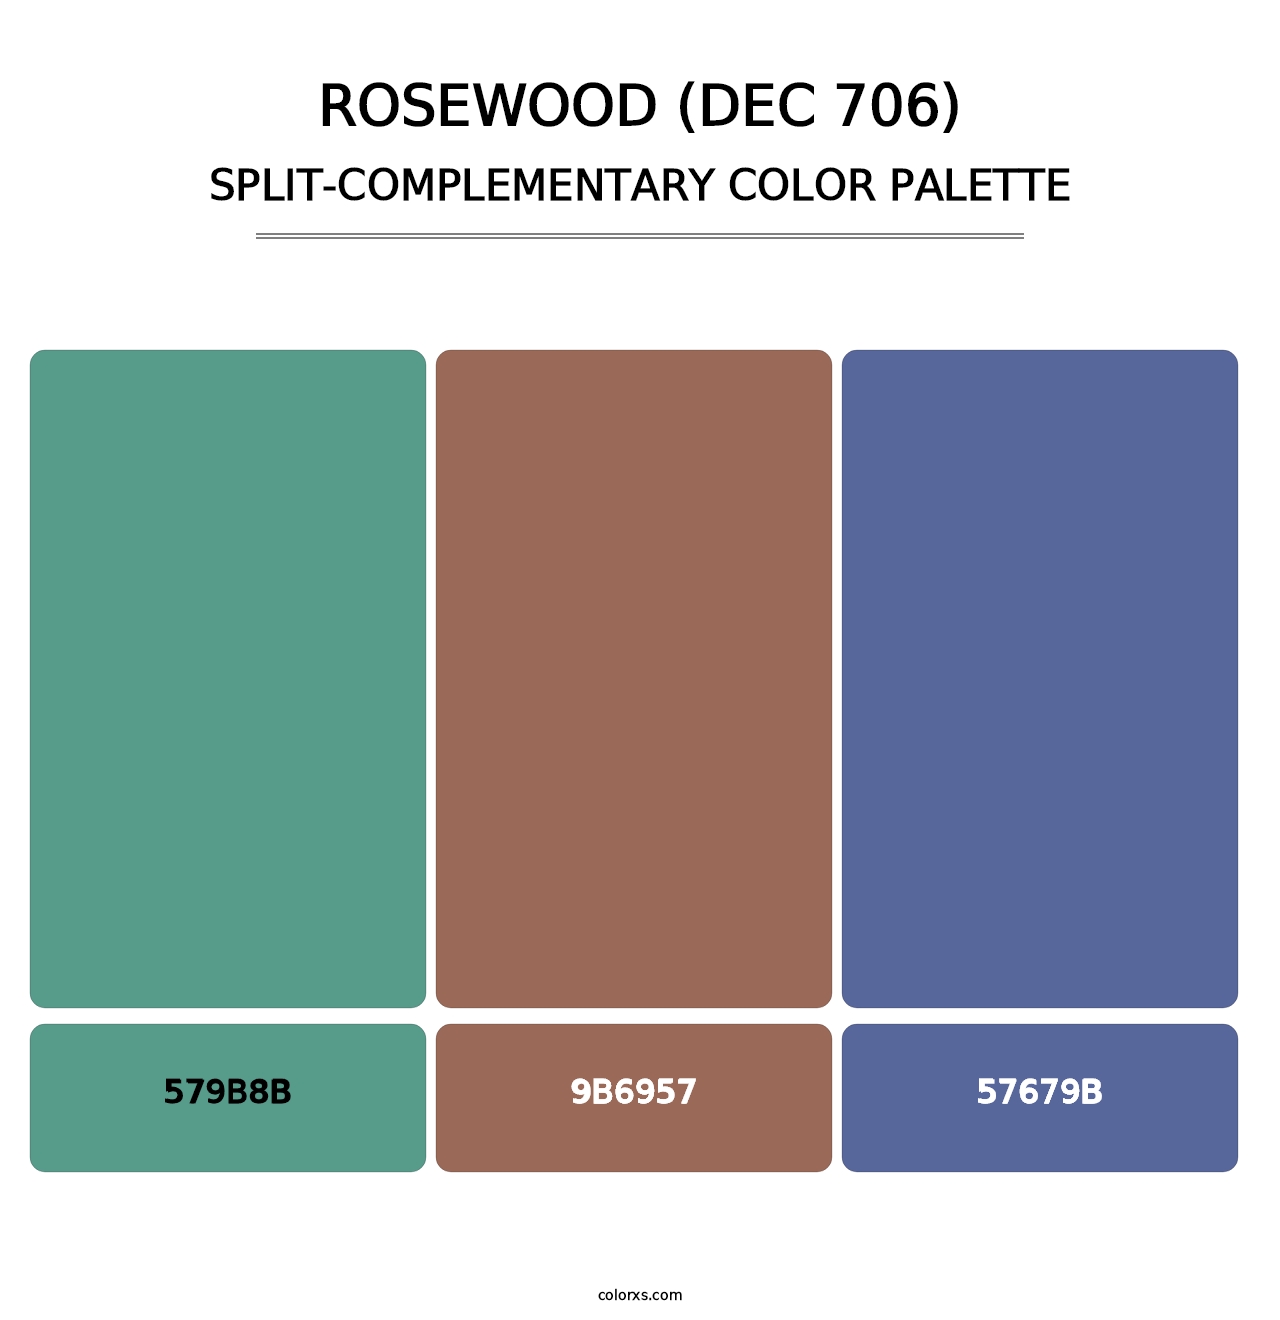 Rosewood (DEC 706) - Split-Complementary Color Palette